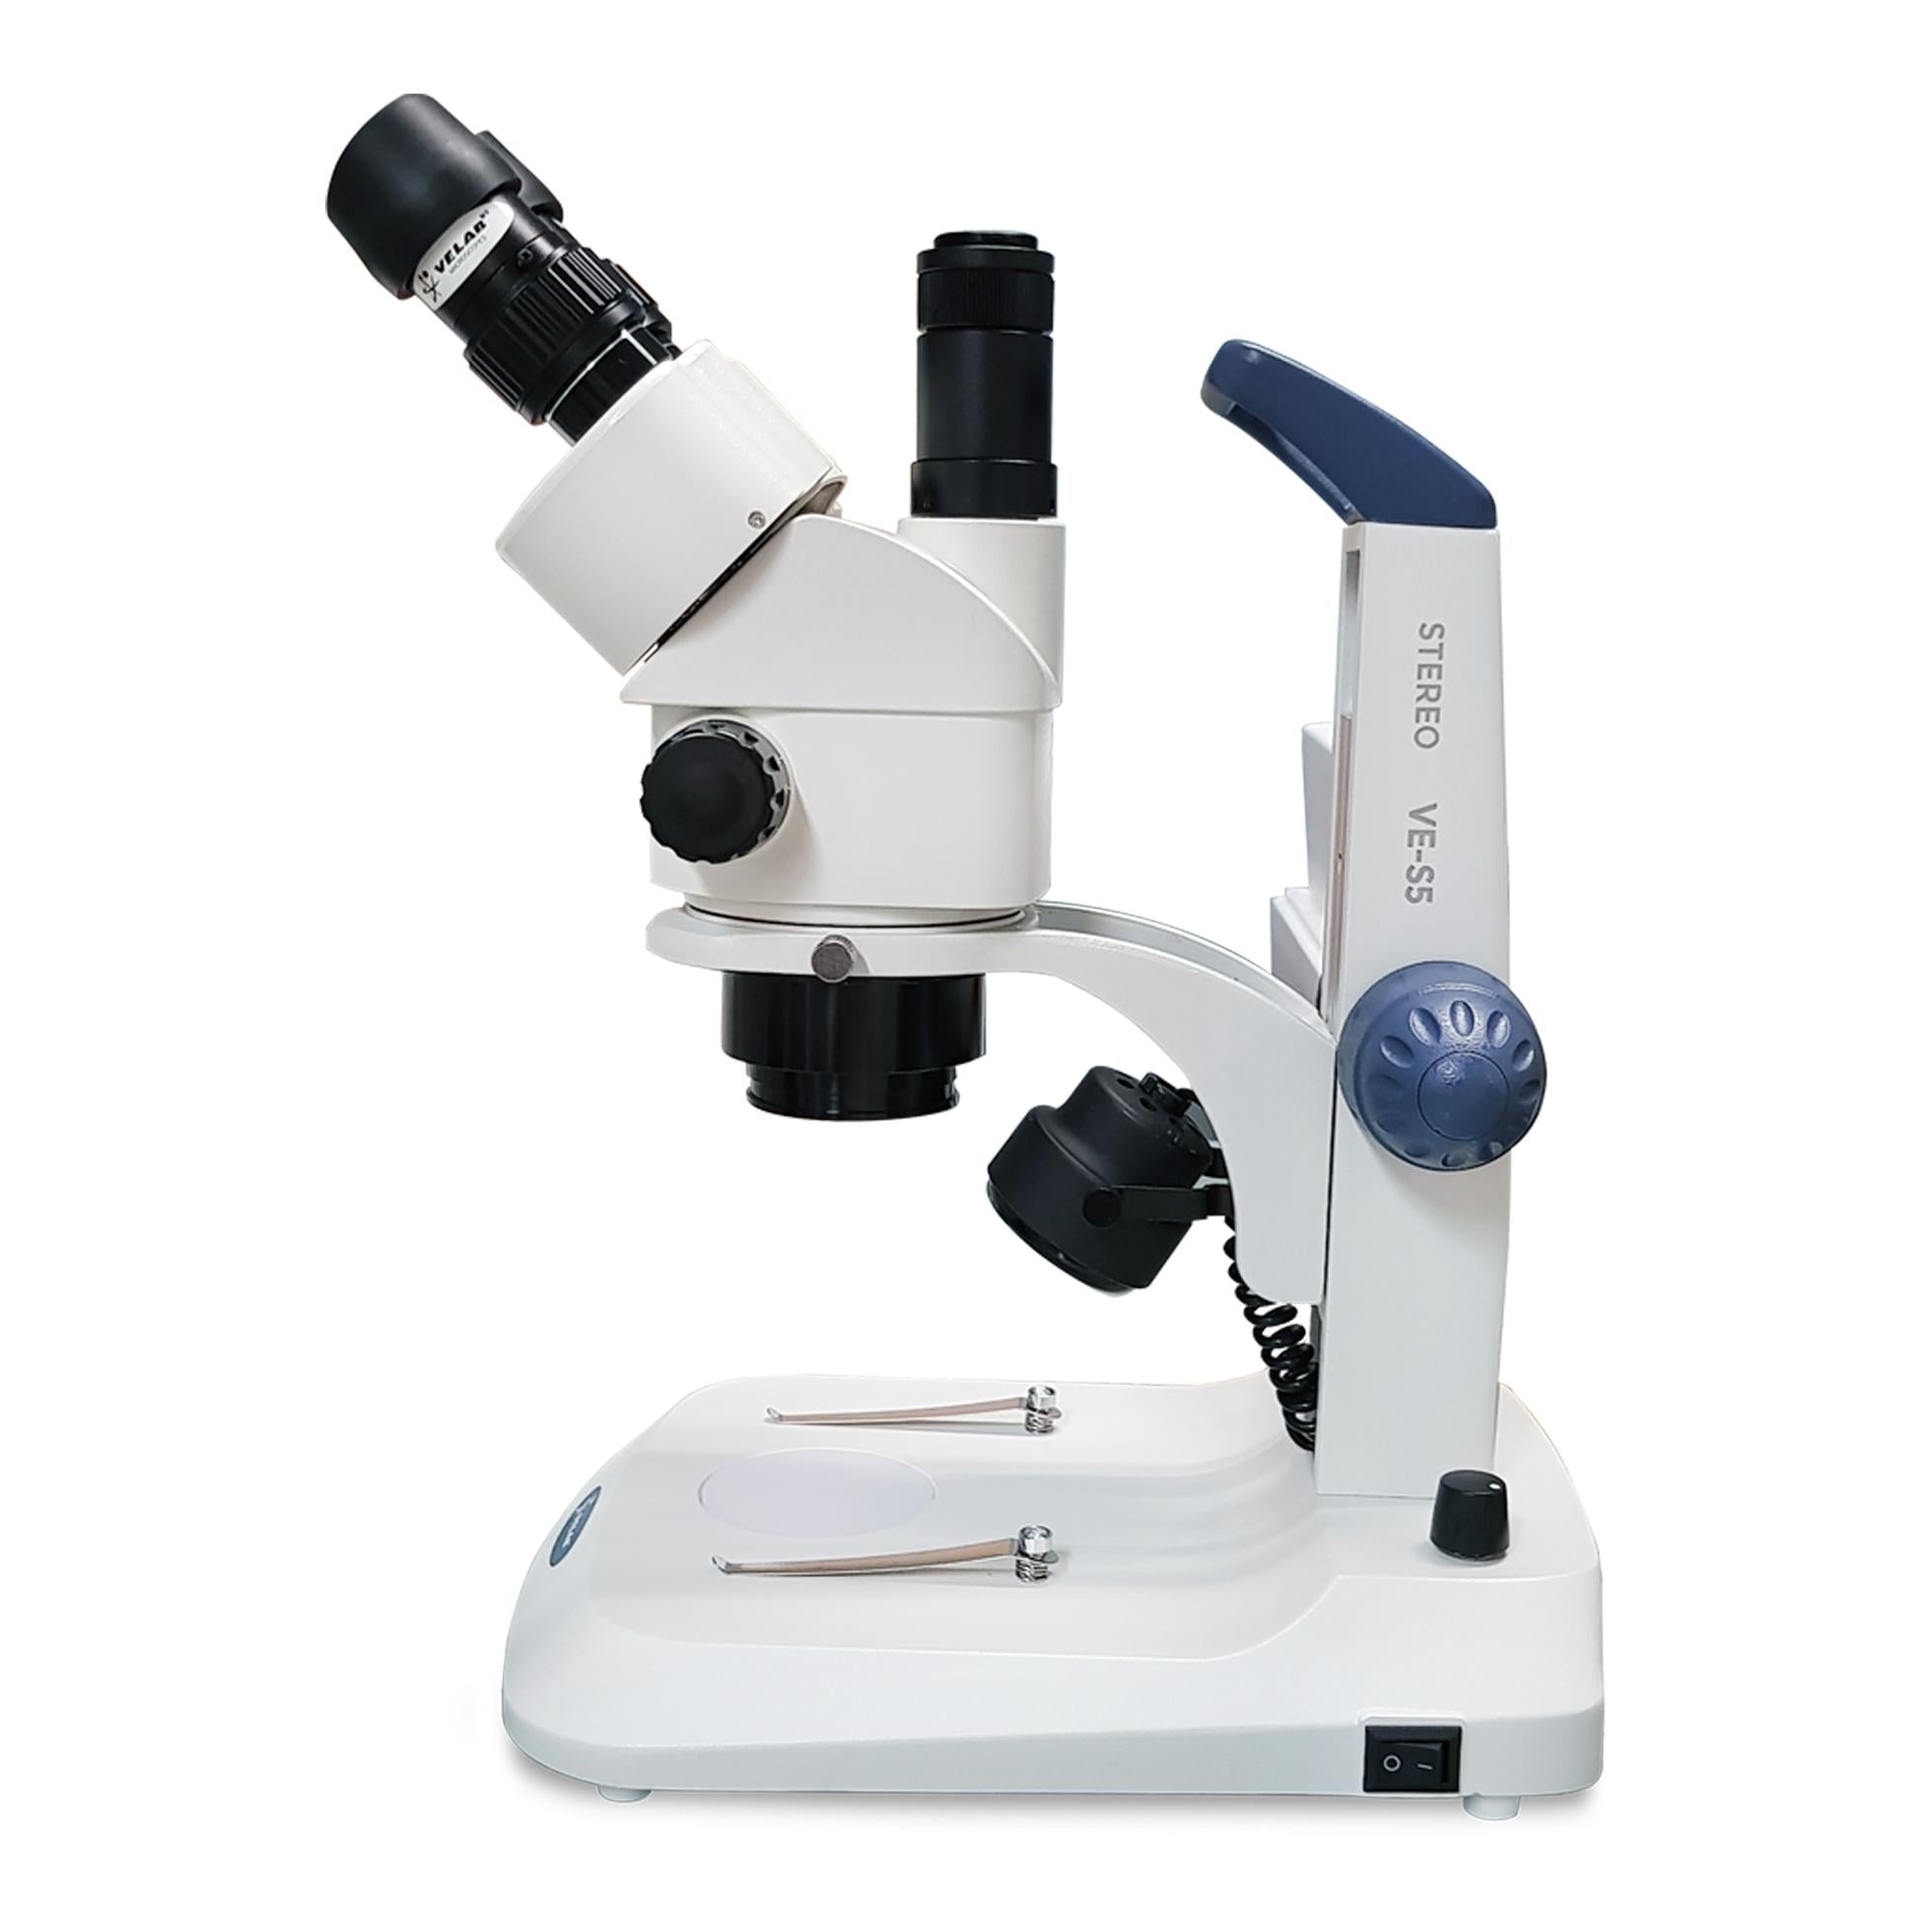 VELAB Trinocular Stereoscopic Microscope with Zoom (Intermediate)